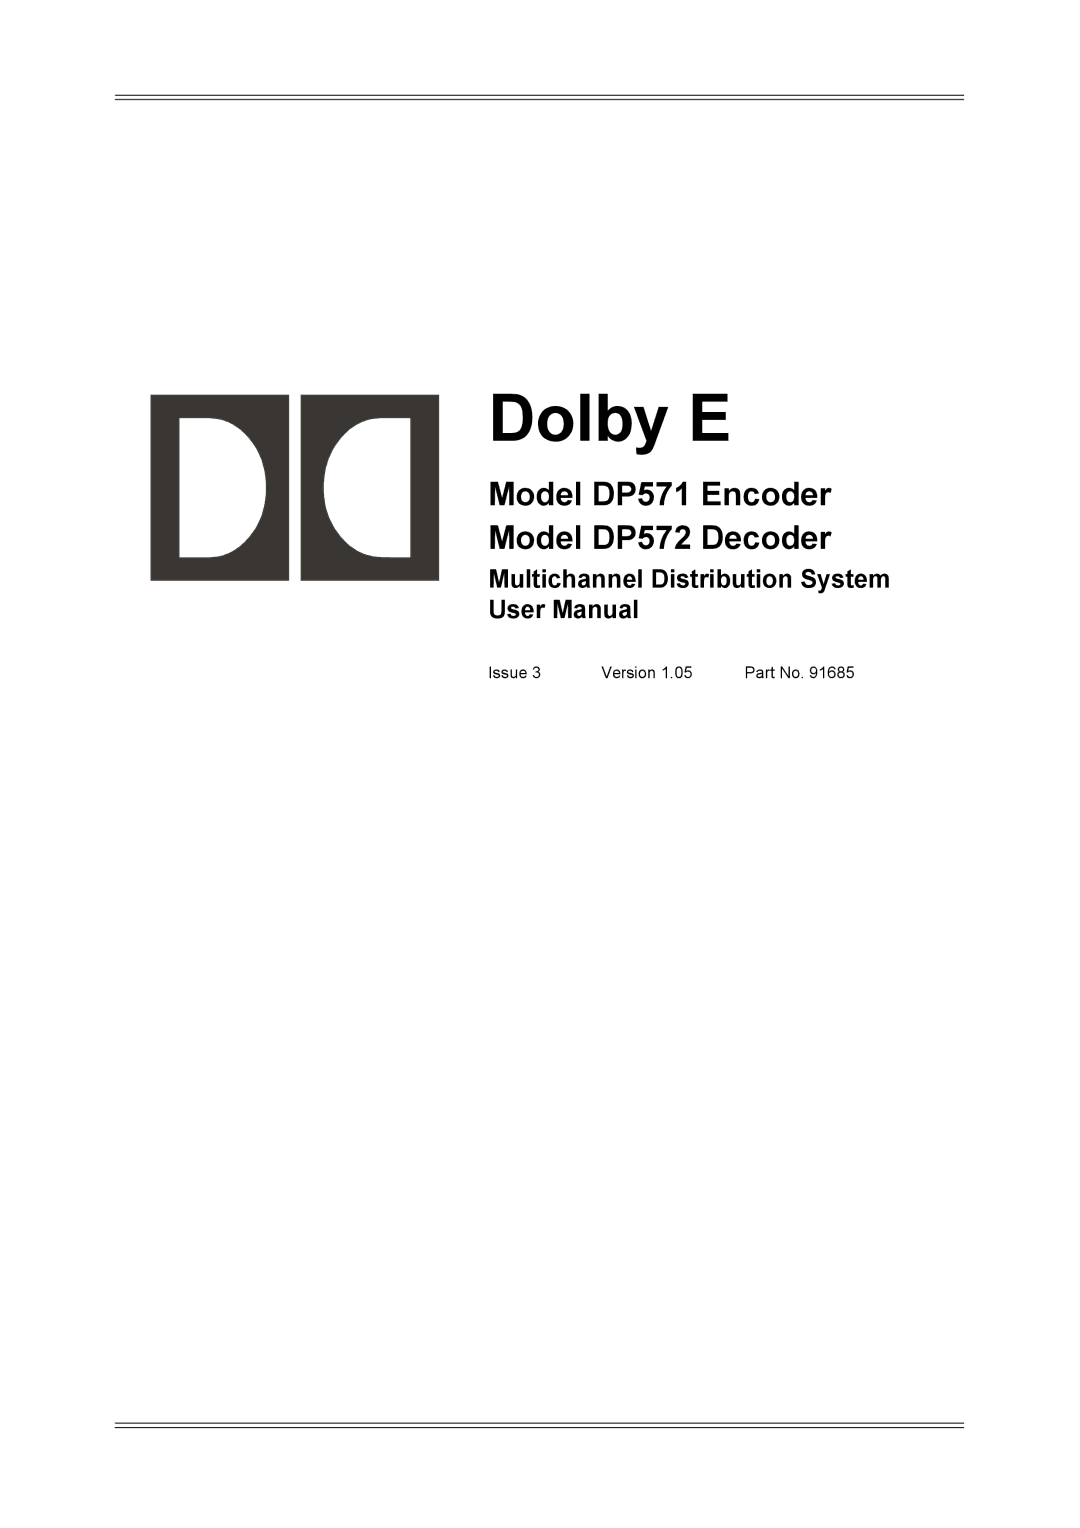 Dolby Laboratories user manual Dolby E, Model DP571 Encoder Model DP572 Decoder 